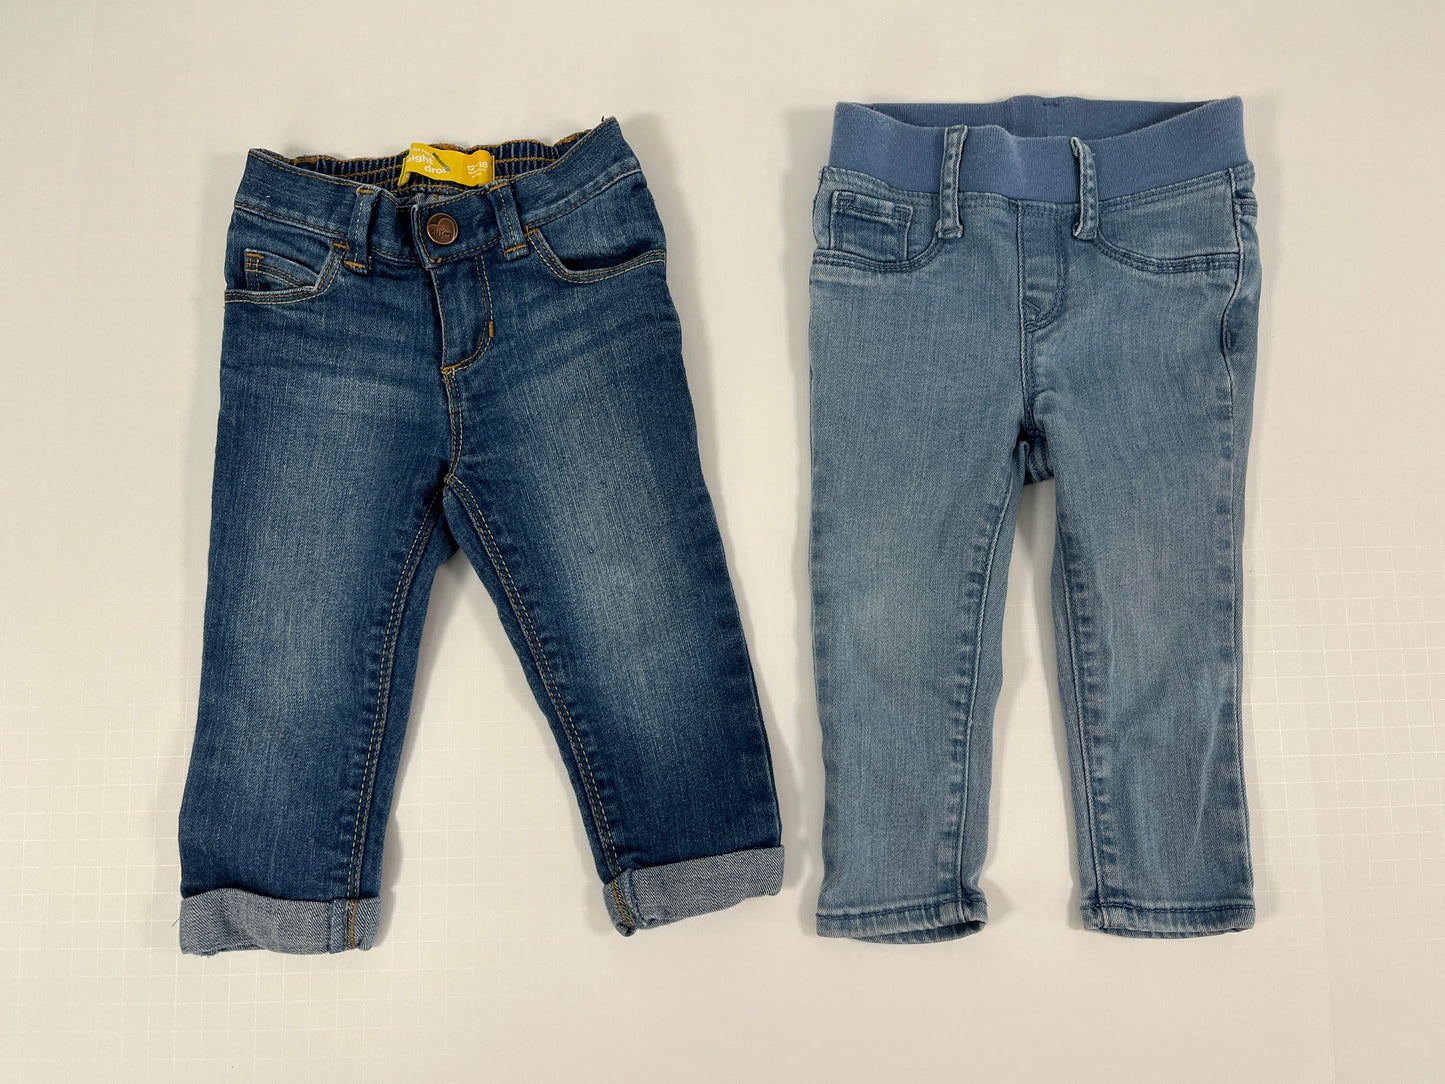 PPU 45242 12-18m girls mixed brand jeans bundle (2)